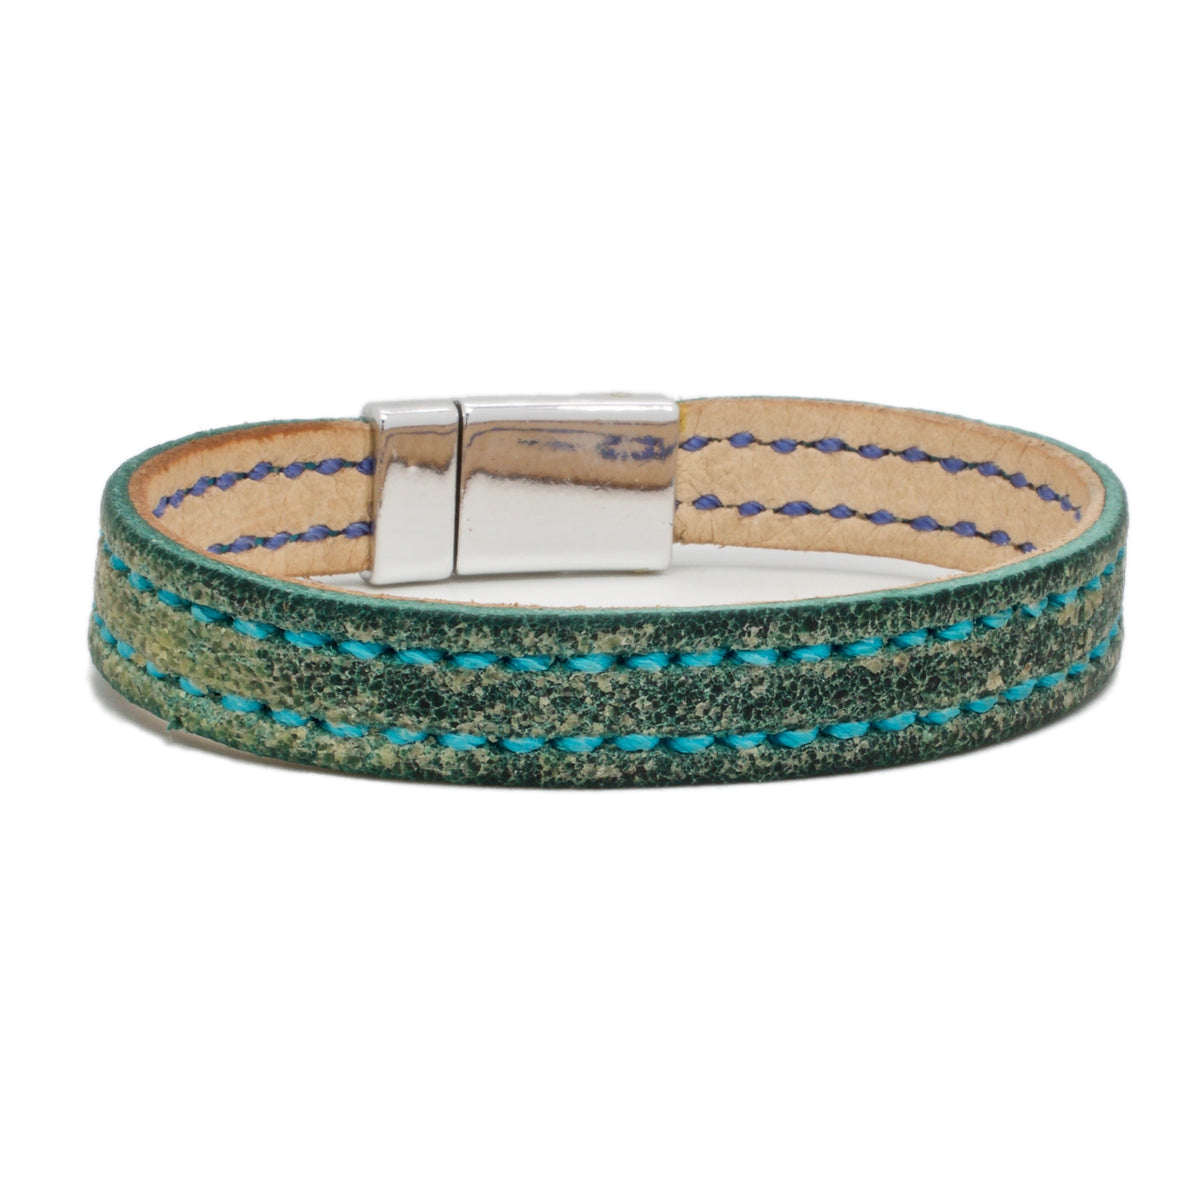 The Antigua Bespoke Leather Bracelet